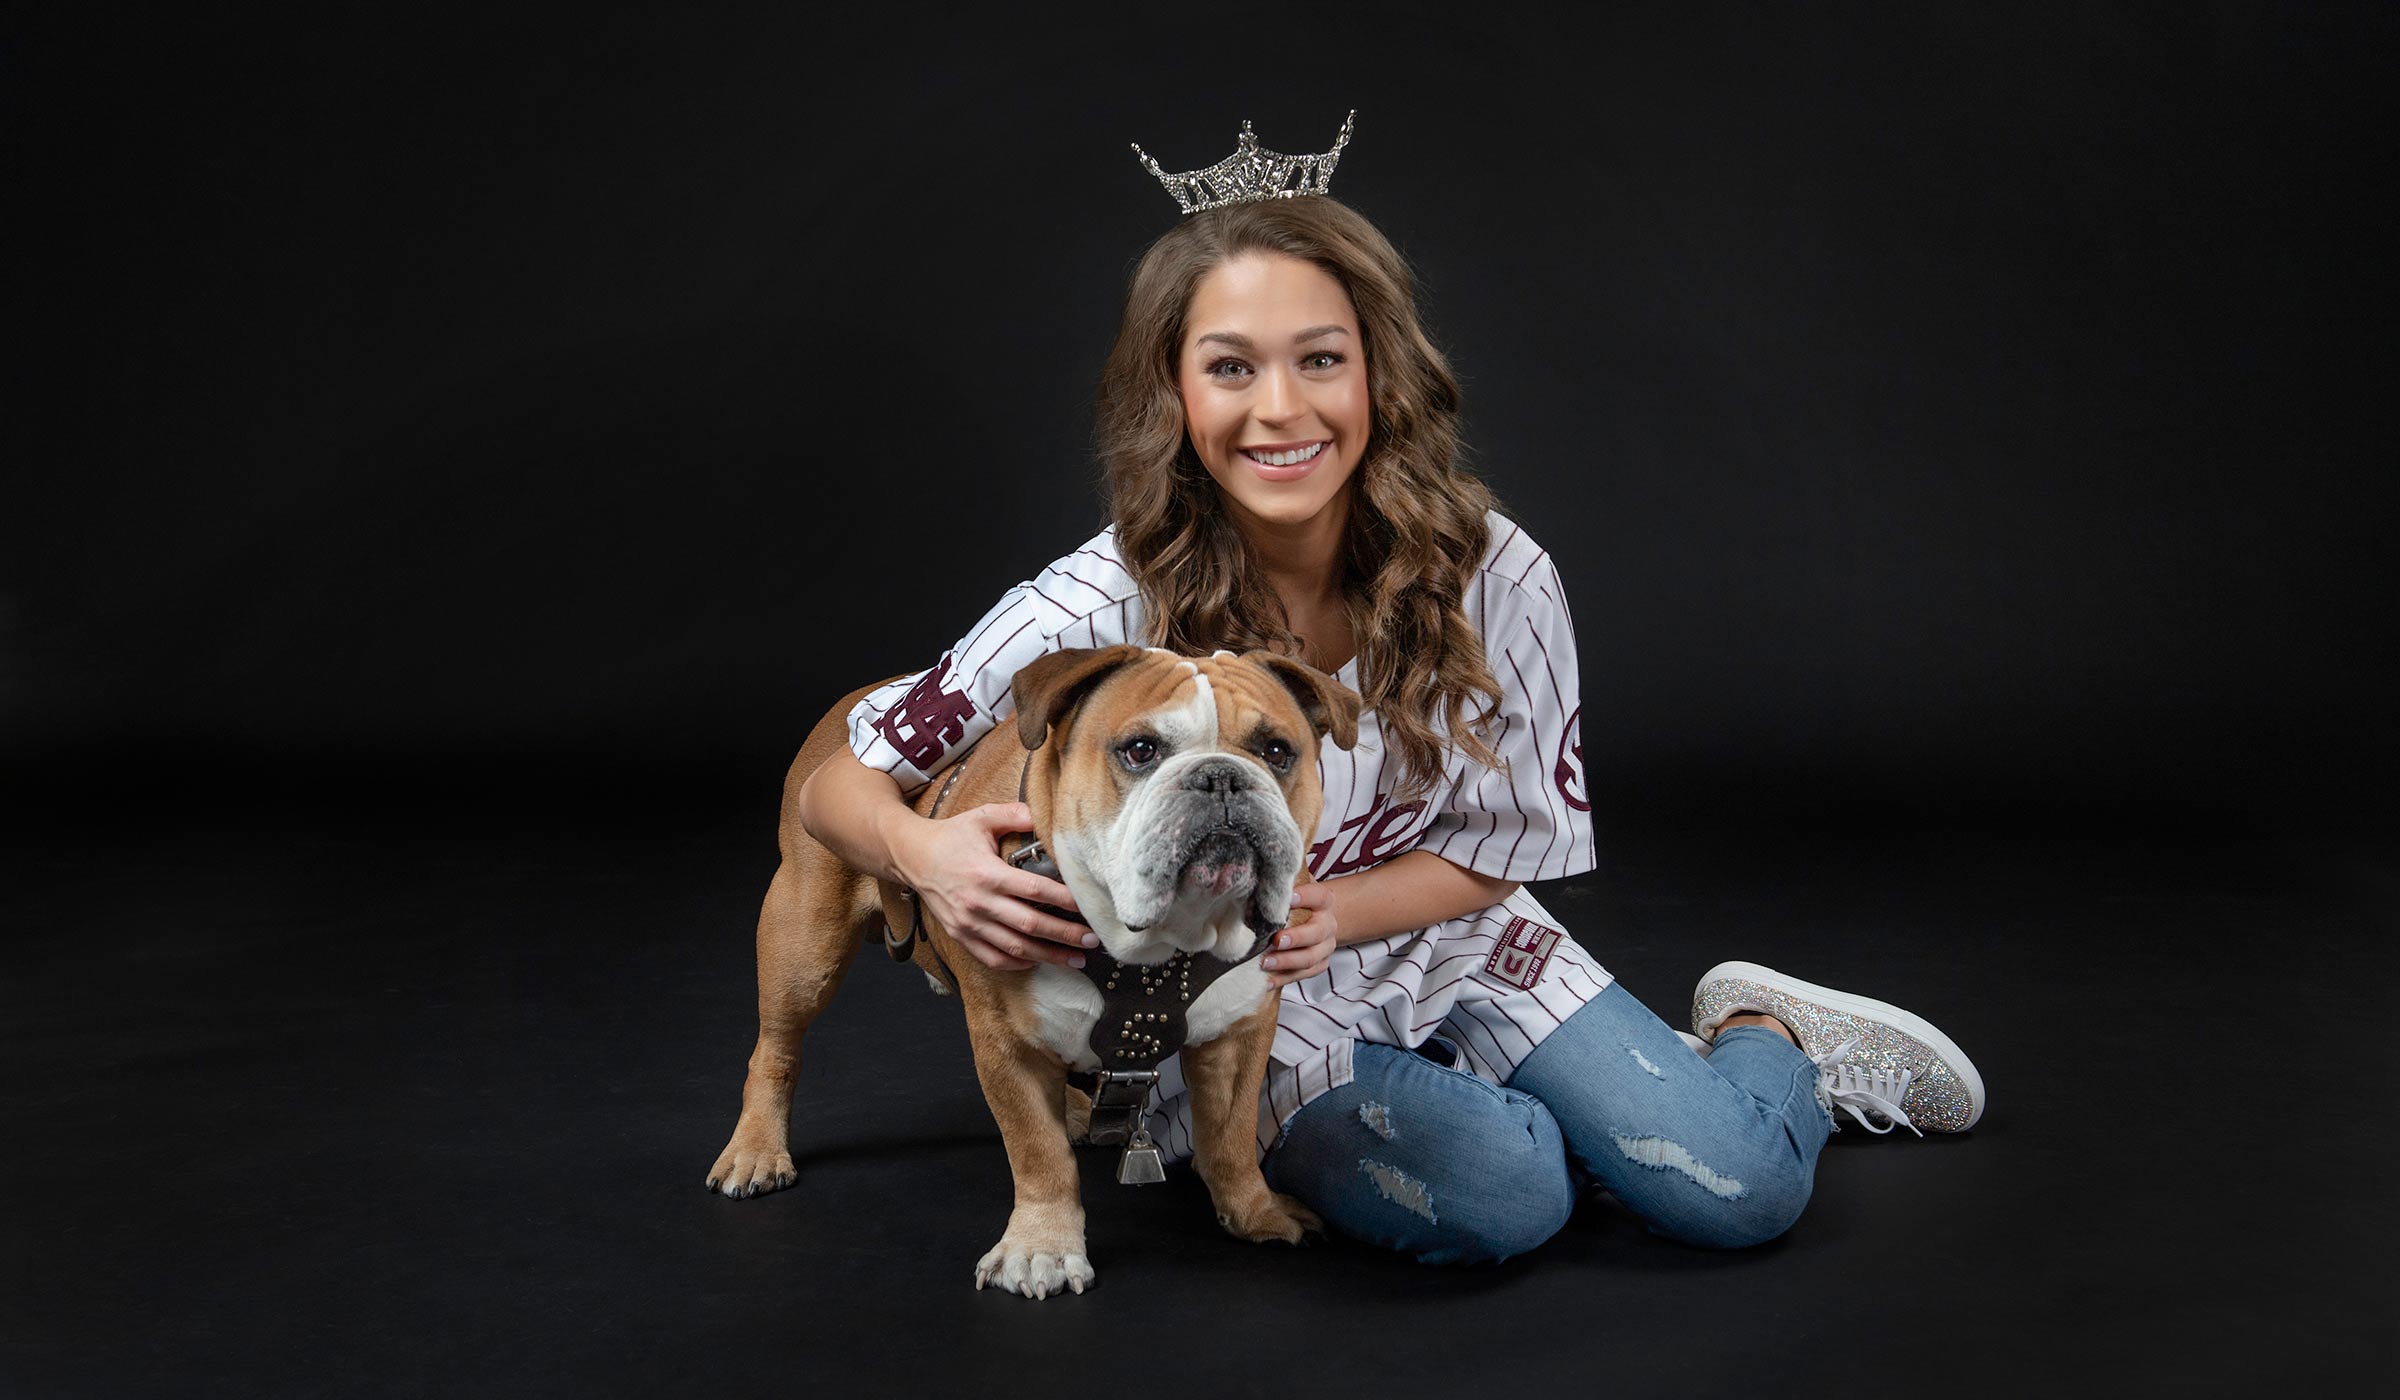 Girl in crown and baseball jersey sitting next to bulldog in studio